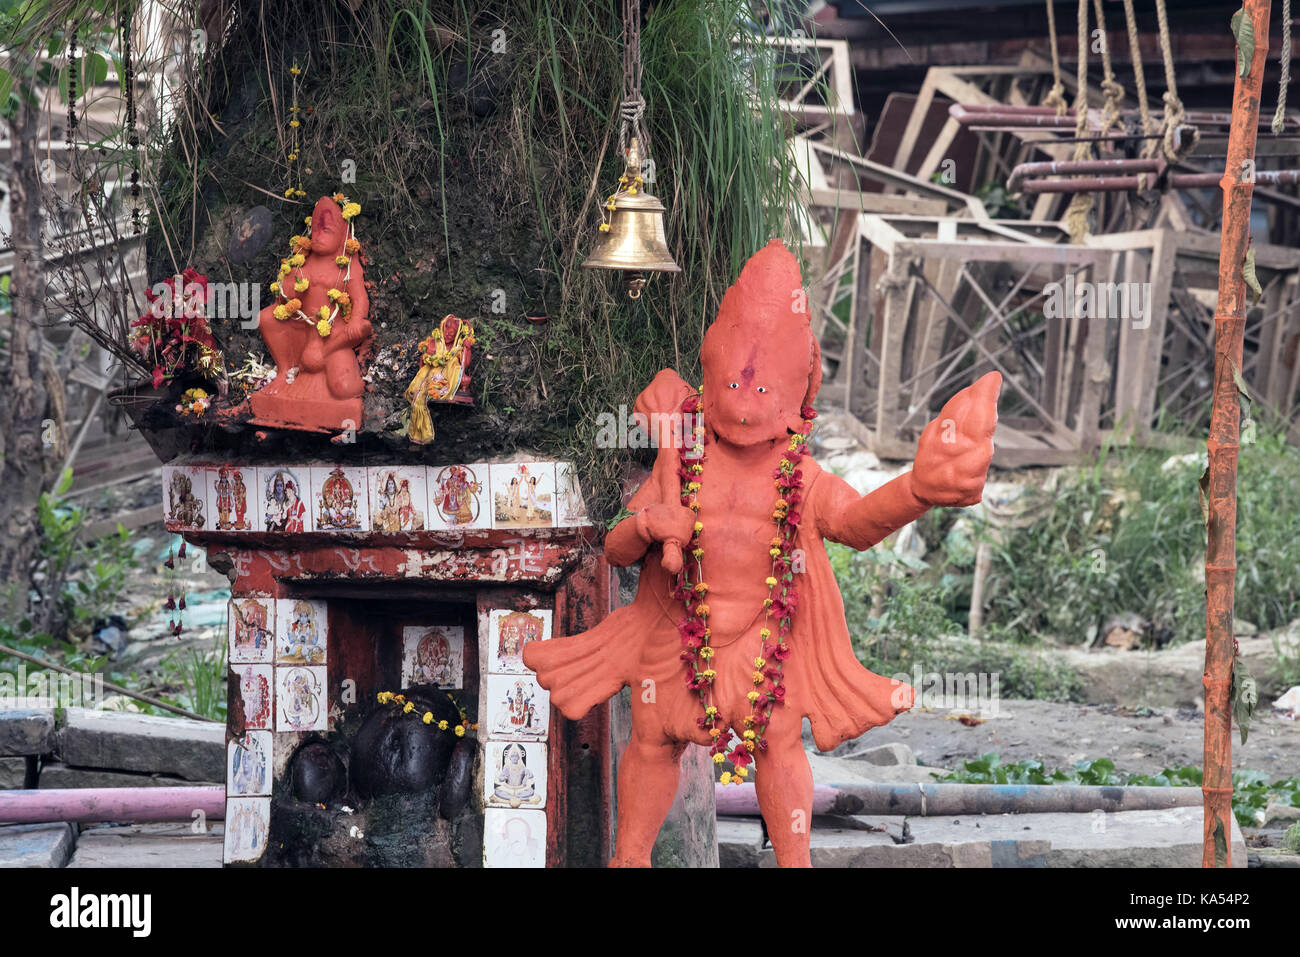 Temple de Hanuman en vertu de l'arbre, babughat, Kolkata, Bengale occidental, Inde, Asie Banque D'Images